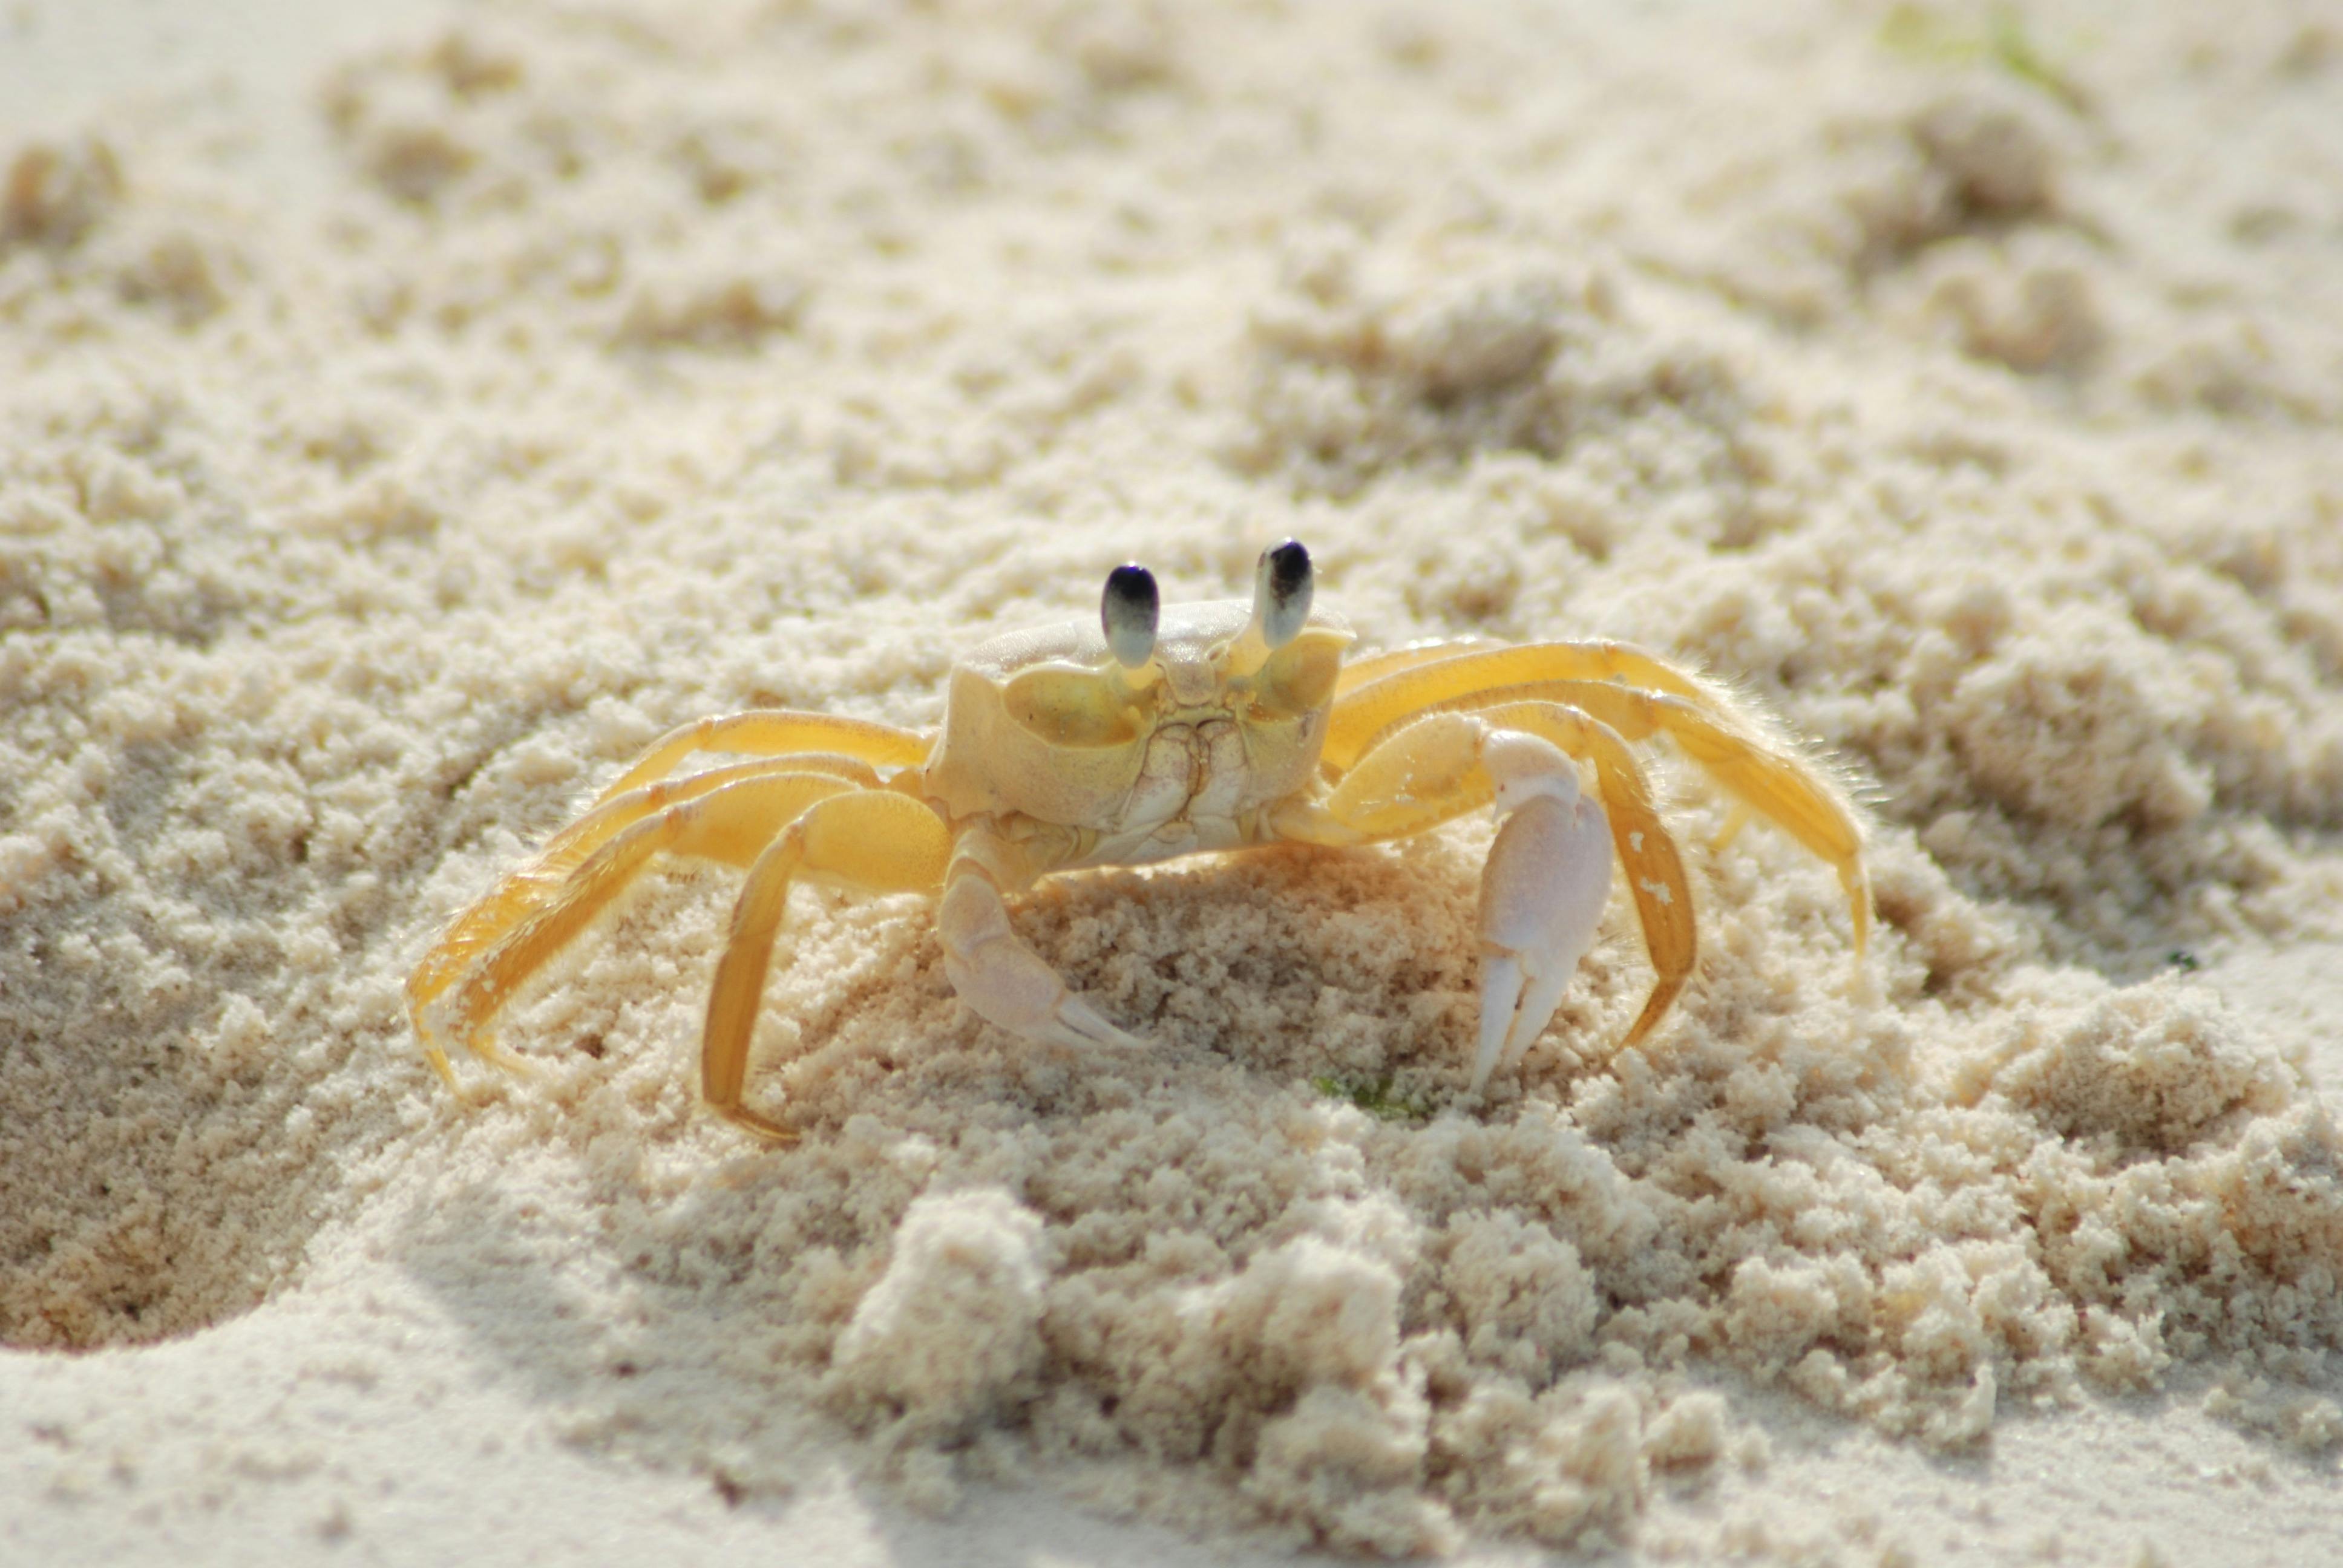 Yellow and White Crab on White Sand Beach during Daytime